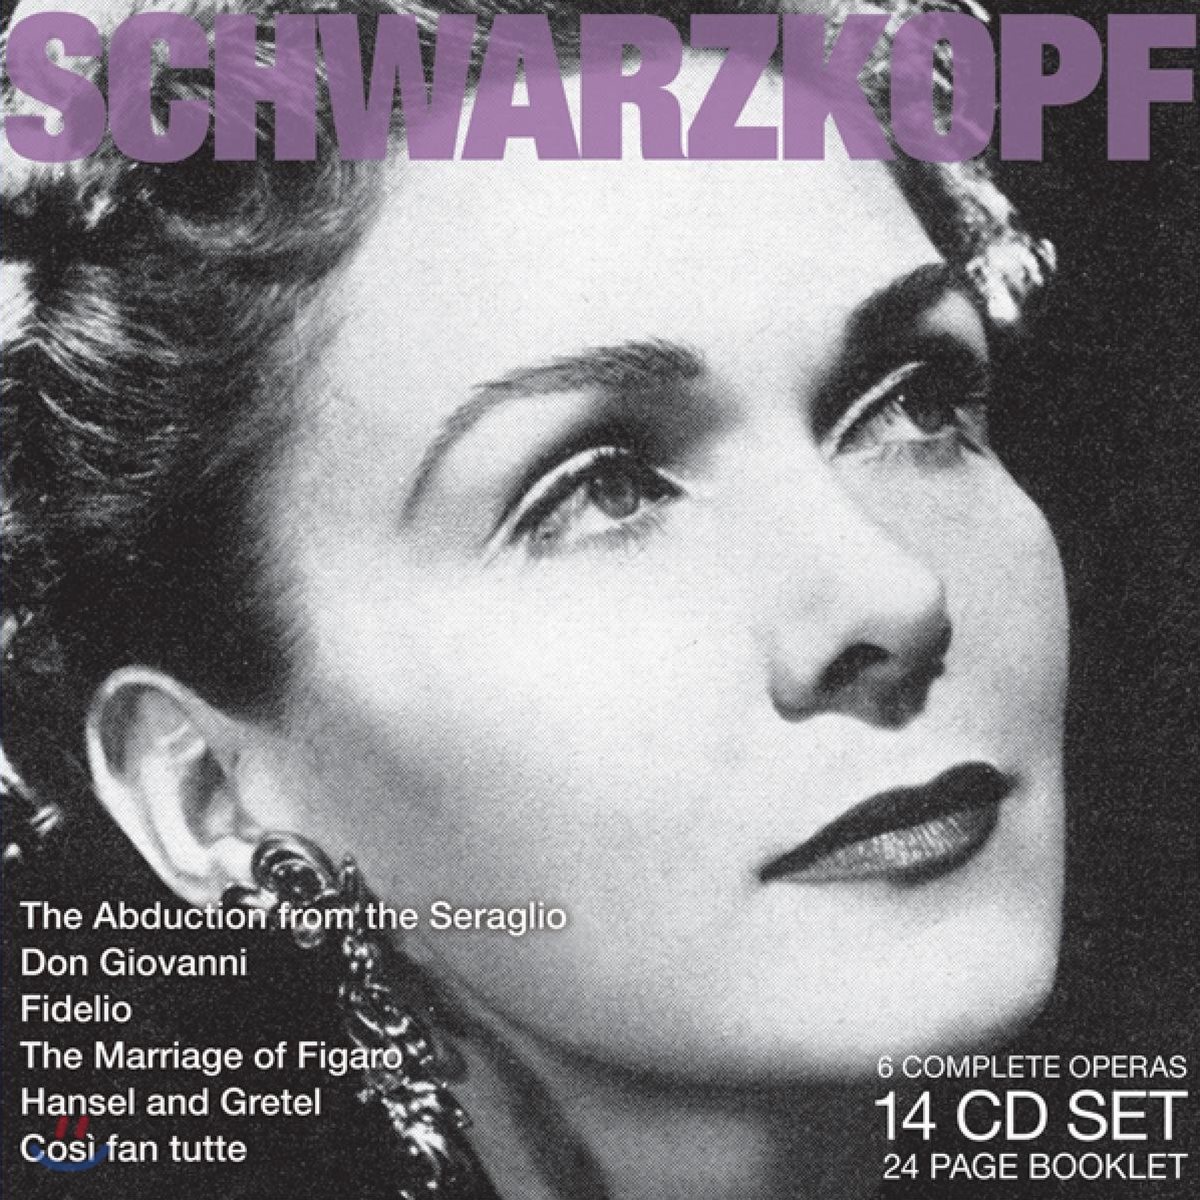 Elisabeth Schwarzkopf 엘리자베스 슈바르츠코프 주연의 역사적 오페라 전곡 6선 (Die Entfuhrung aus dem Serail, Don Giovanni, Le nozze di Figaro etc.)